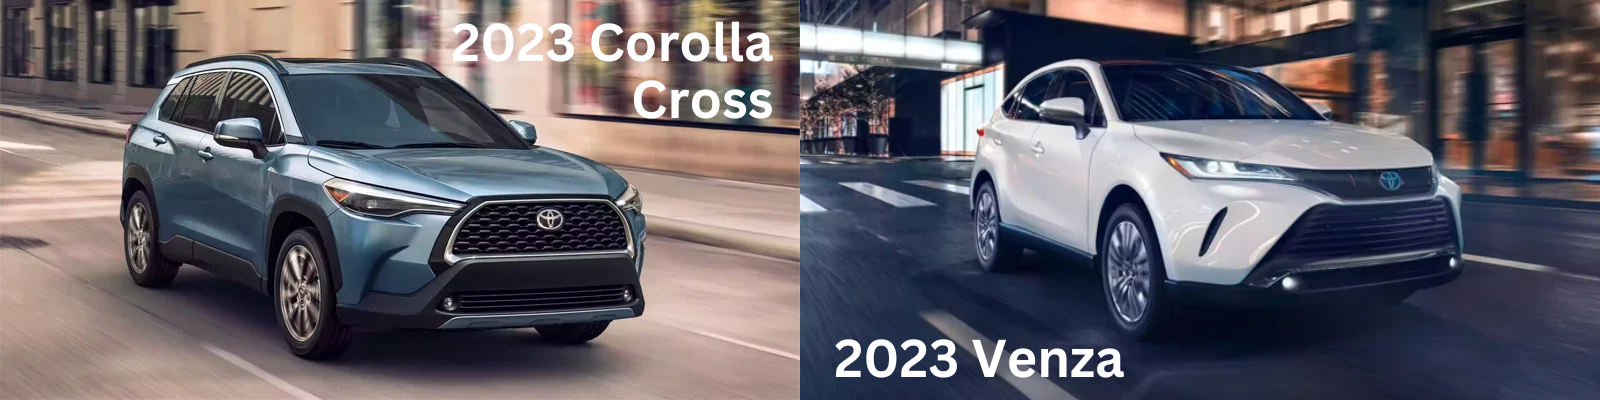 2023 Toyota Corolla Cross vs 2023 Toyota Venza in Chesapeake, VA